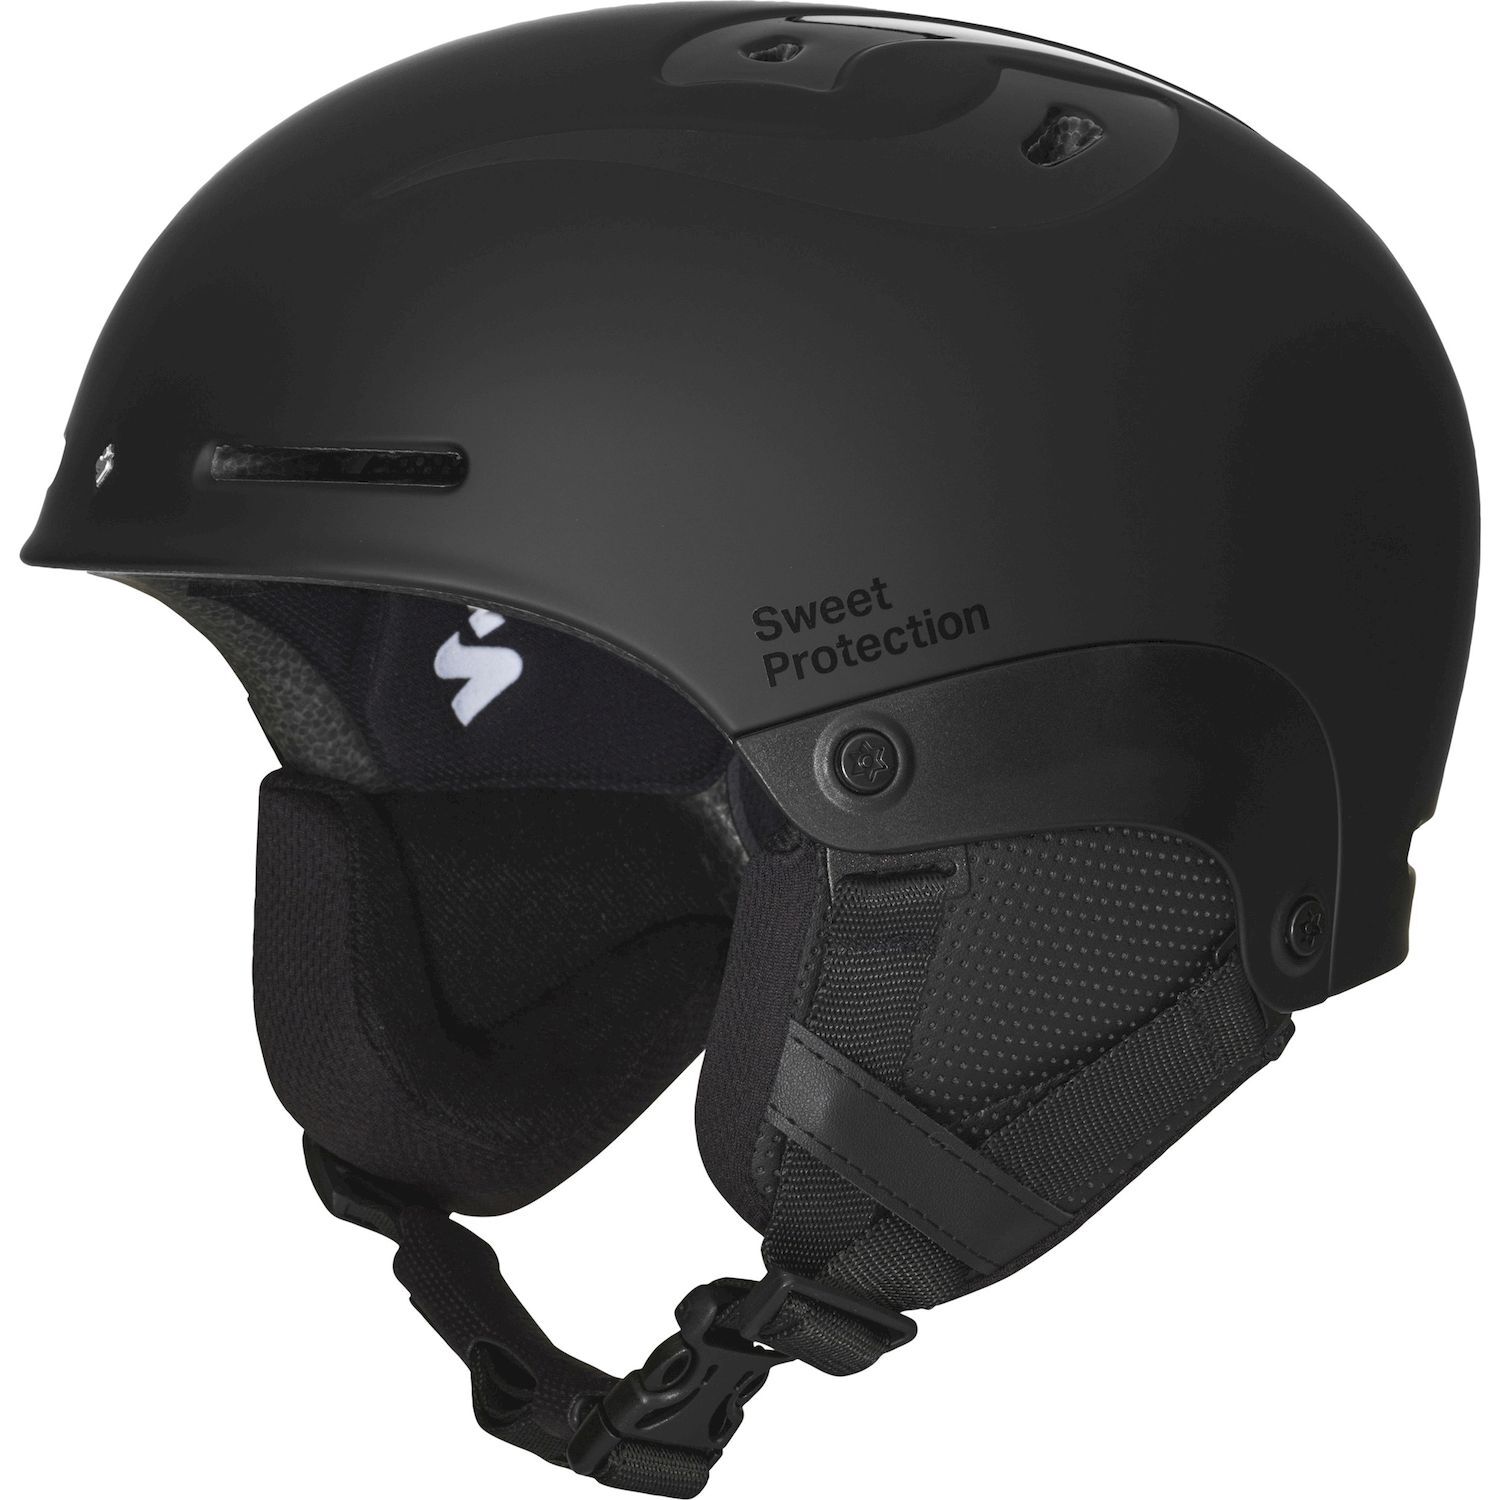 Sweet Protection Blaster II - Ski helmet - Men's